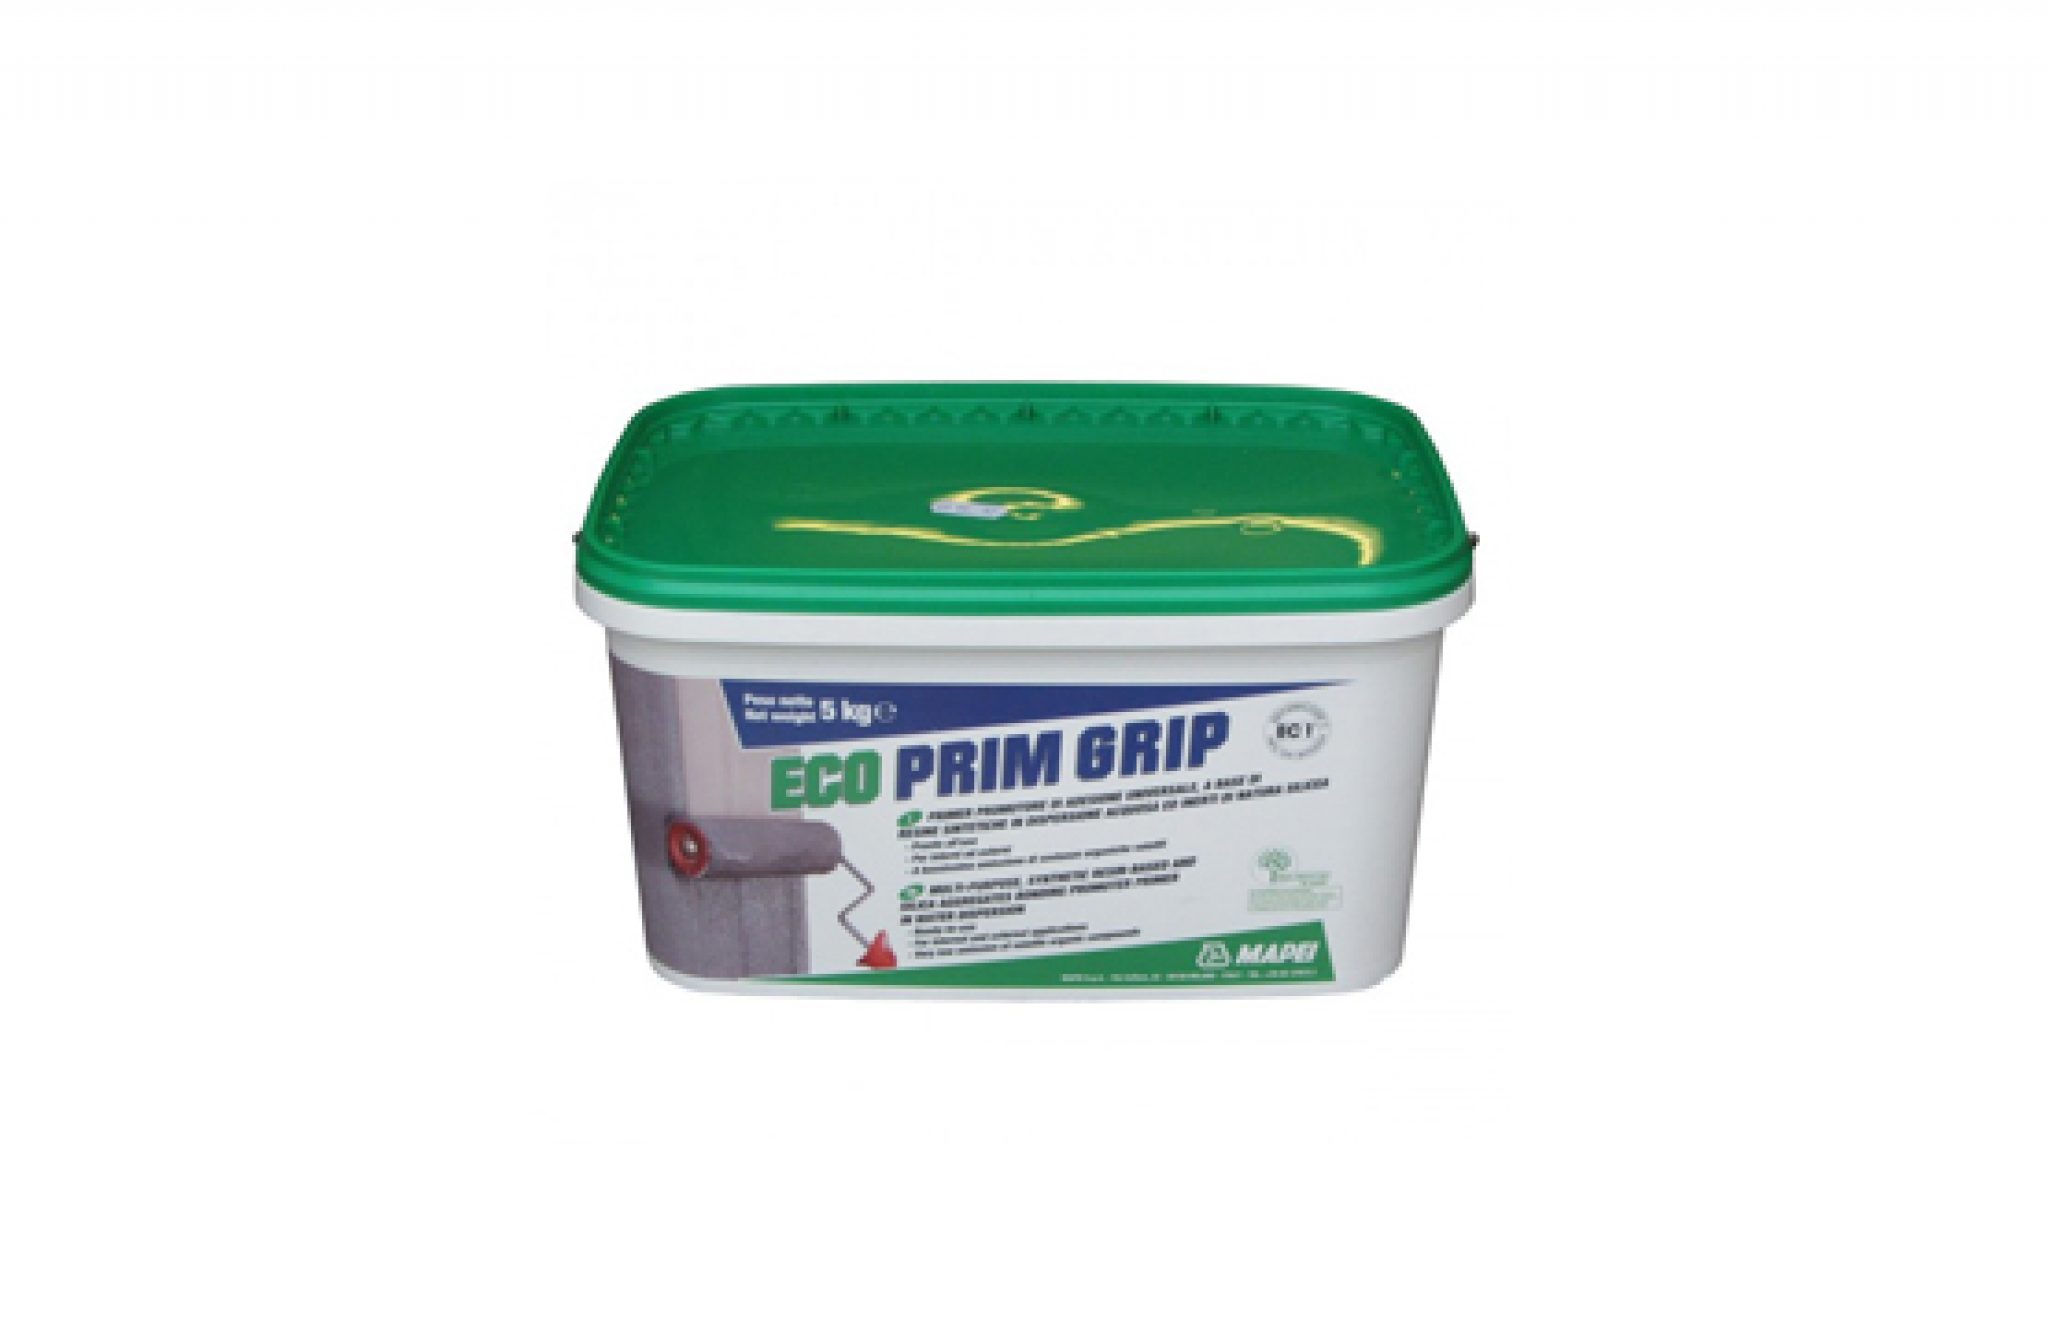 Mapei Eco Prim Grip 2048x1317 